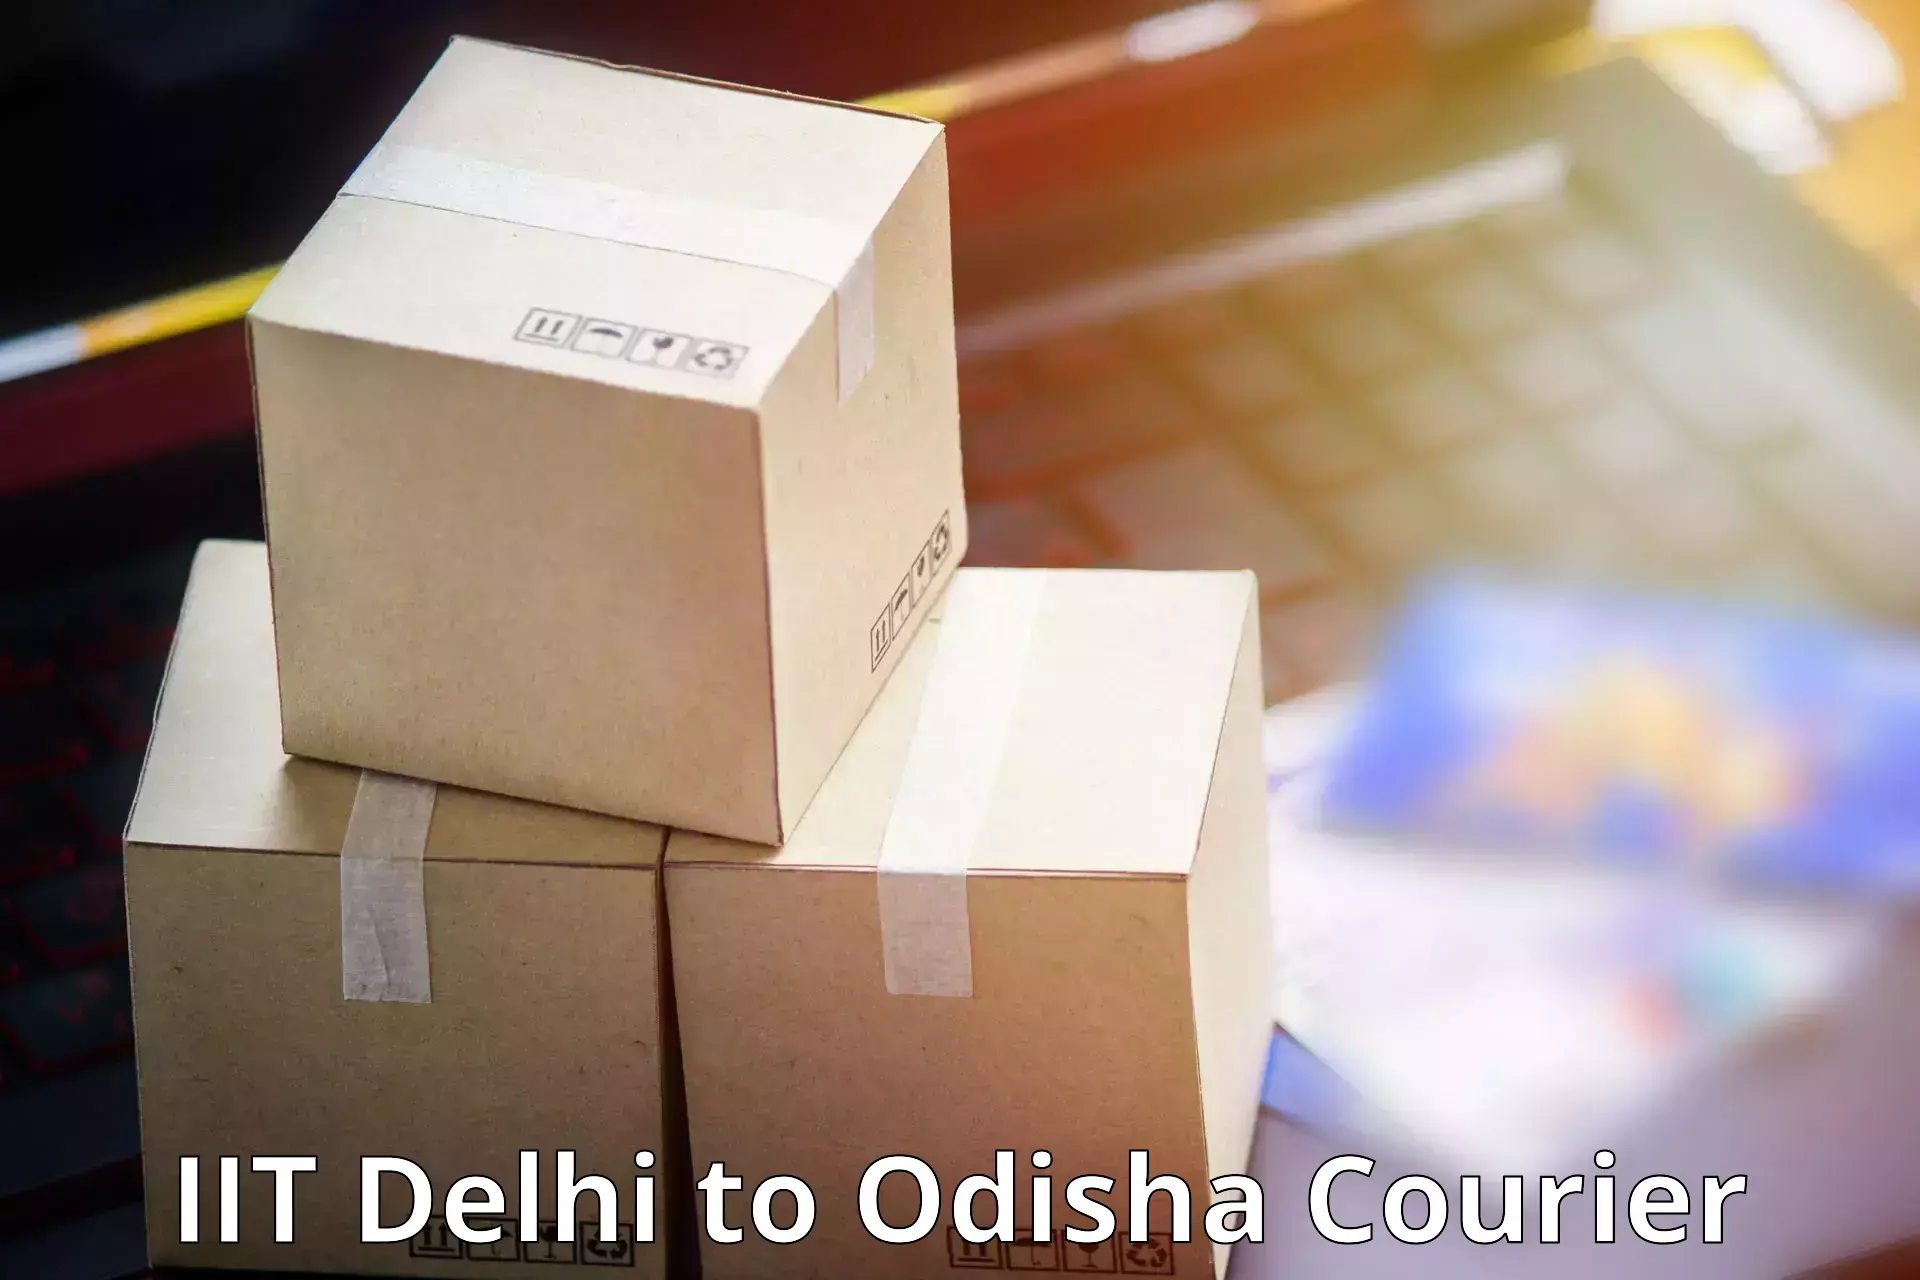 24/7 courier service IIT Delhi to Odisha